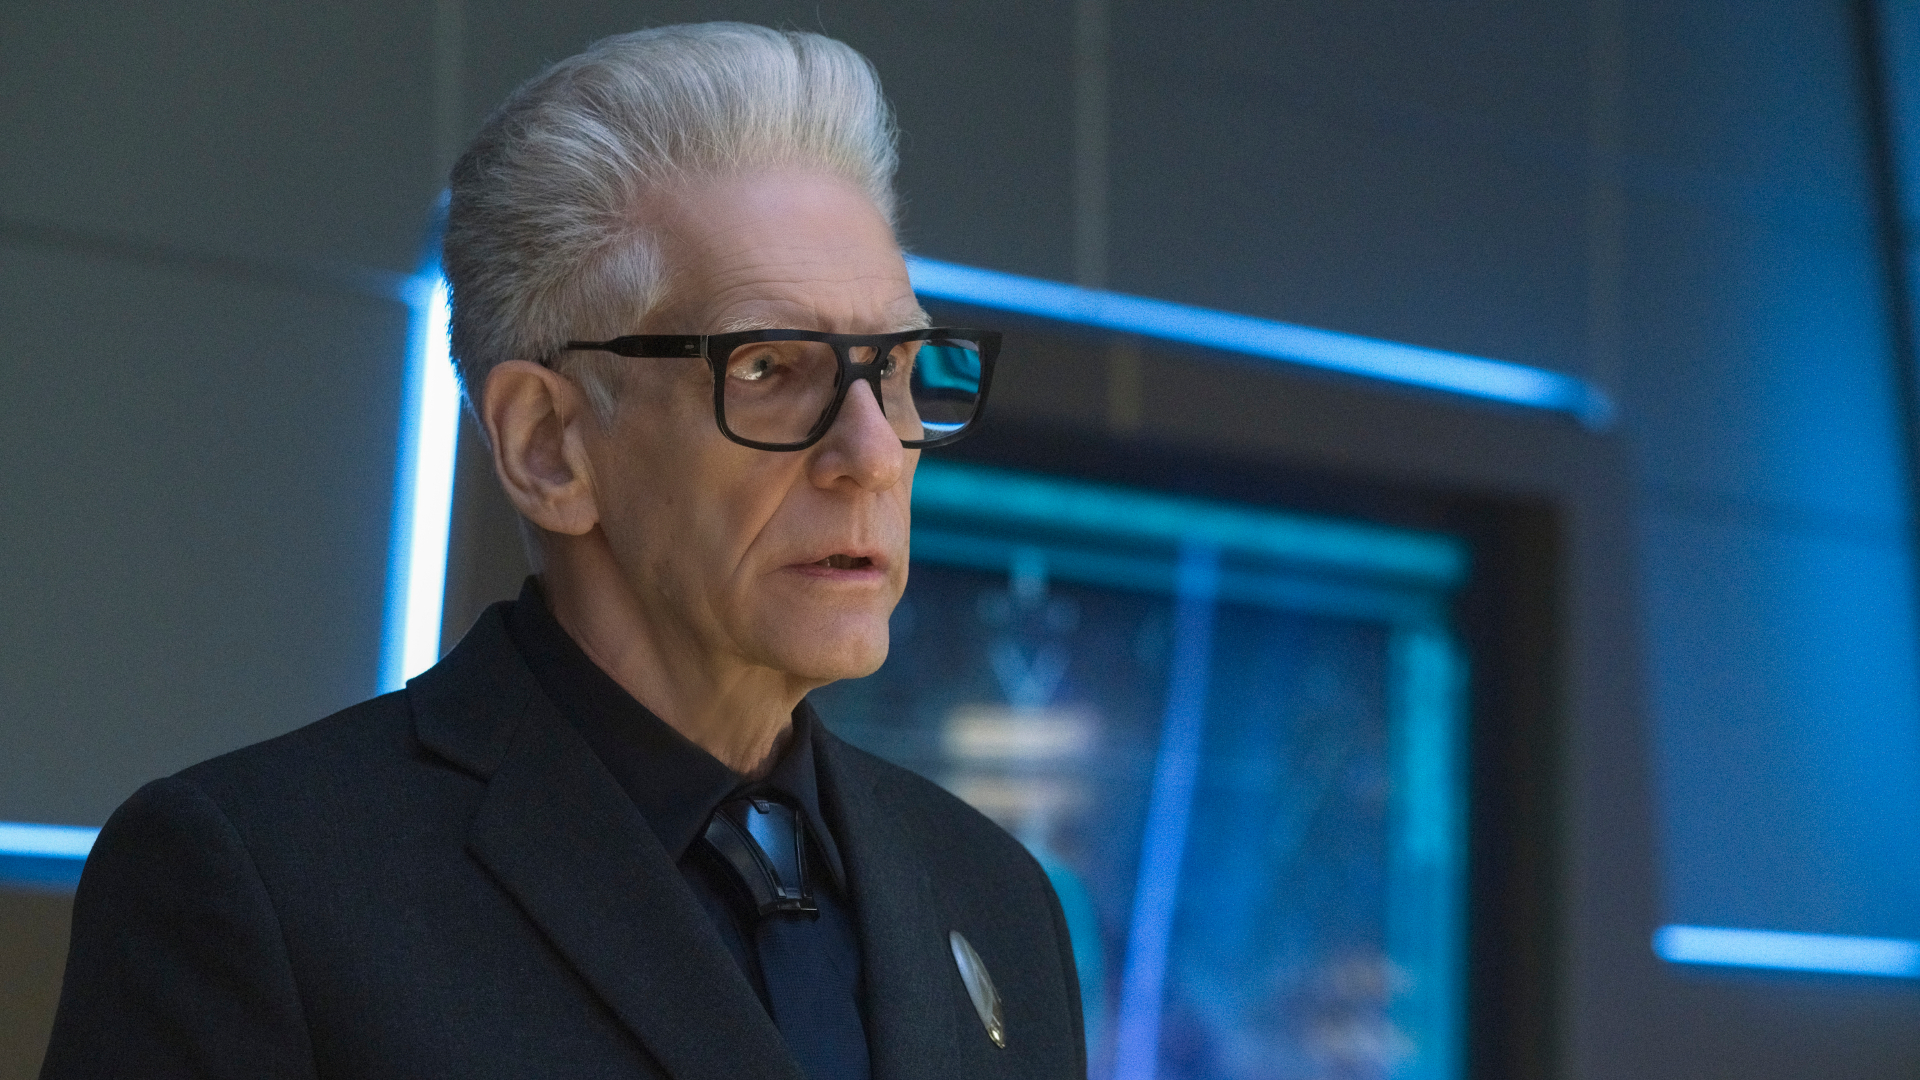 Dr Kovich, played by David Cronenberg, in Star Trek Discovery.